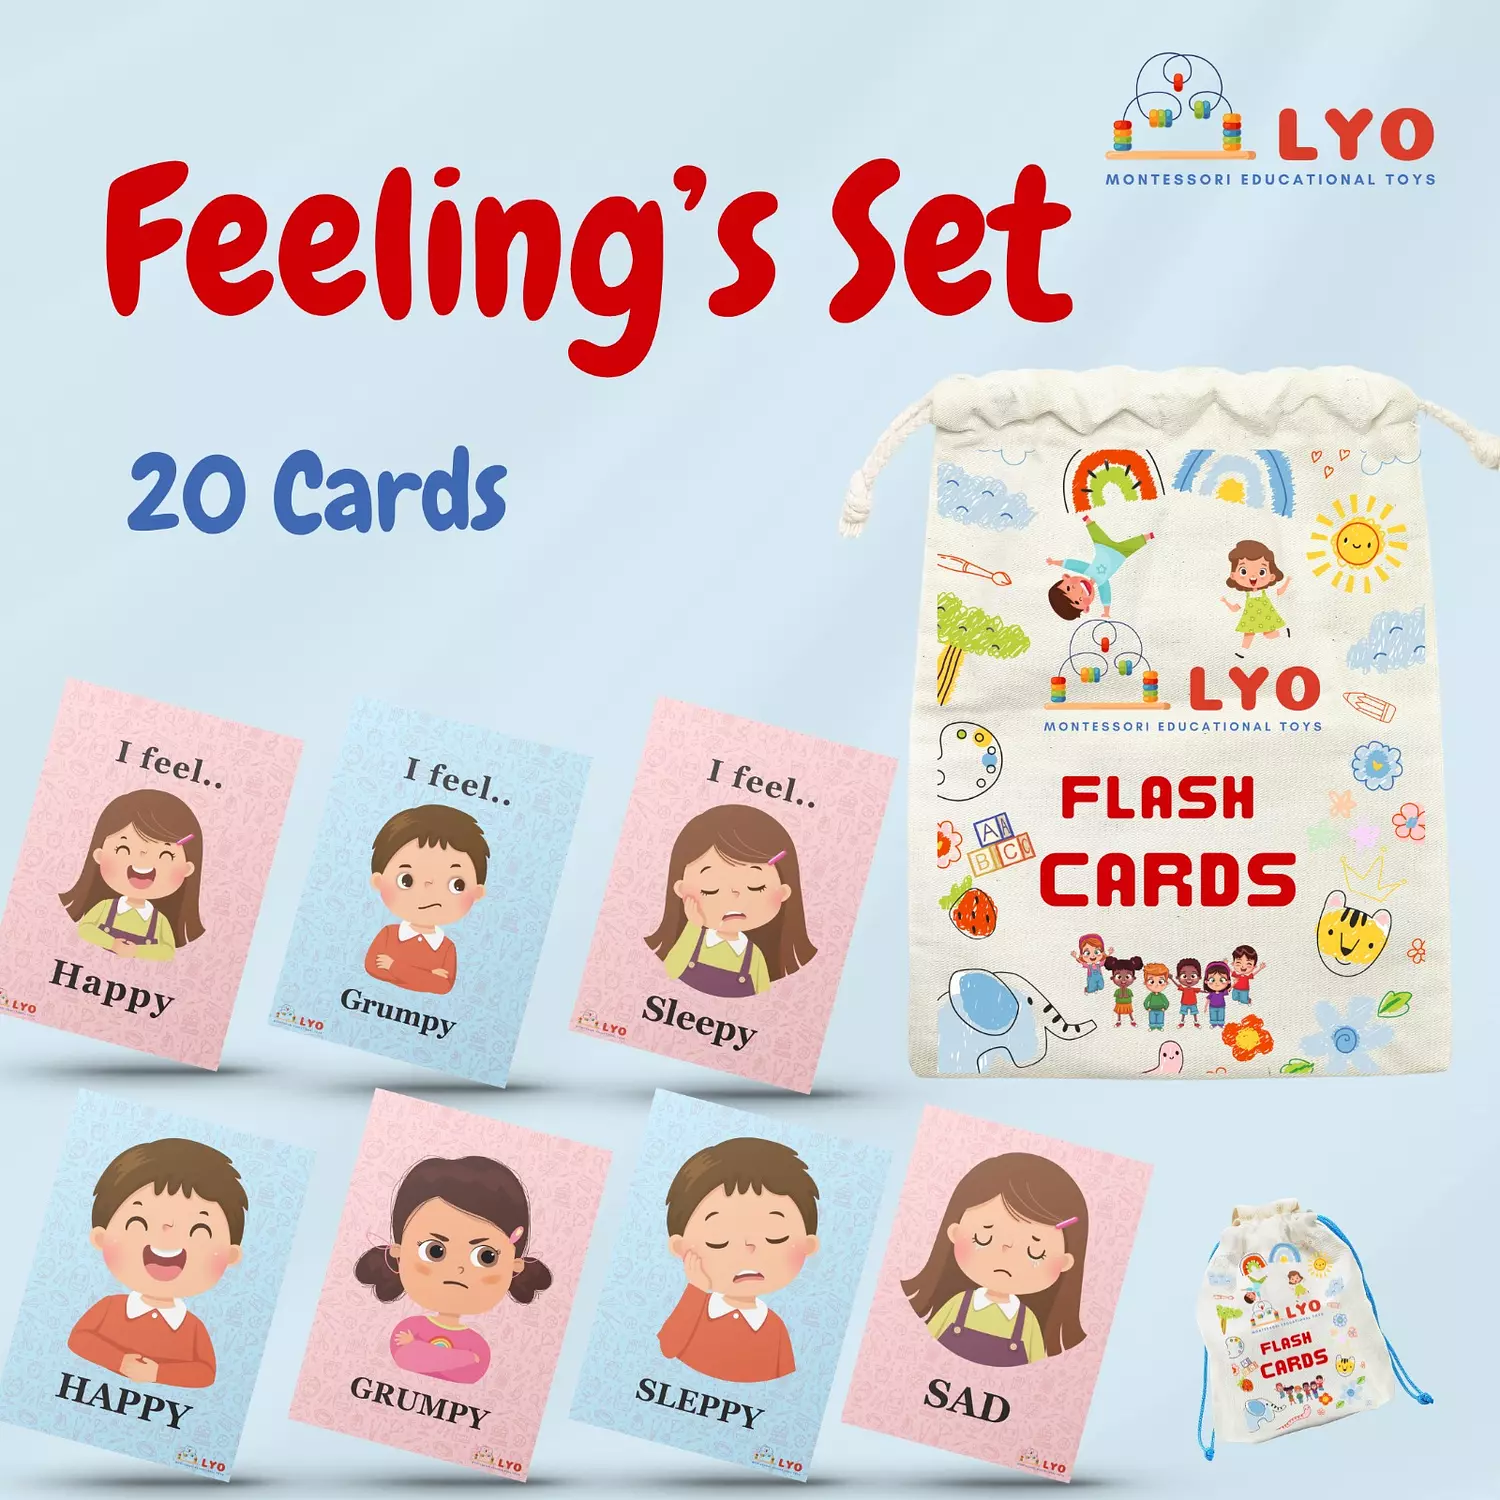 LYO Flash Cards (Feelings) hover image